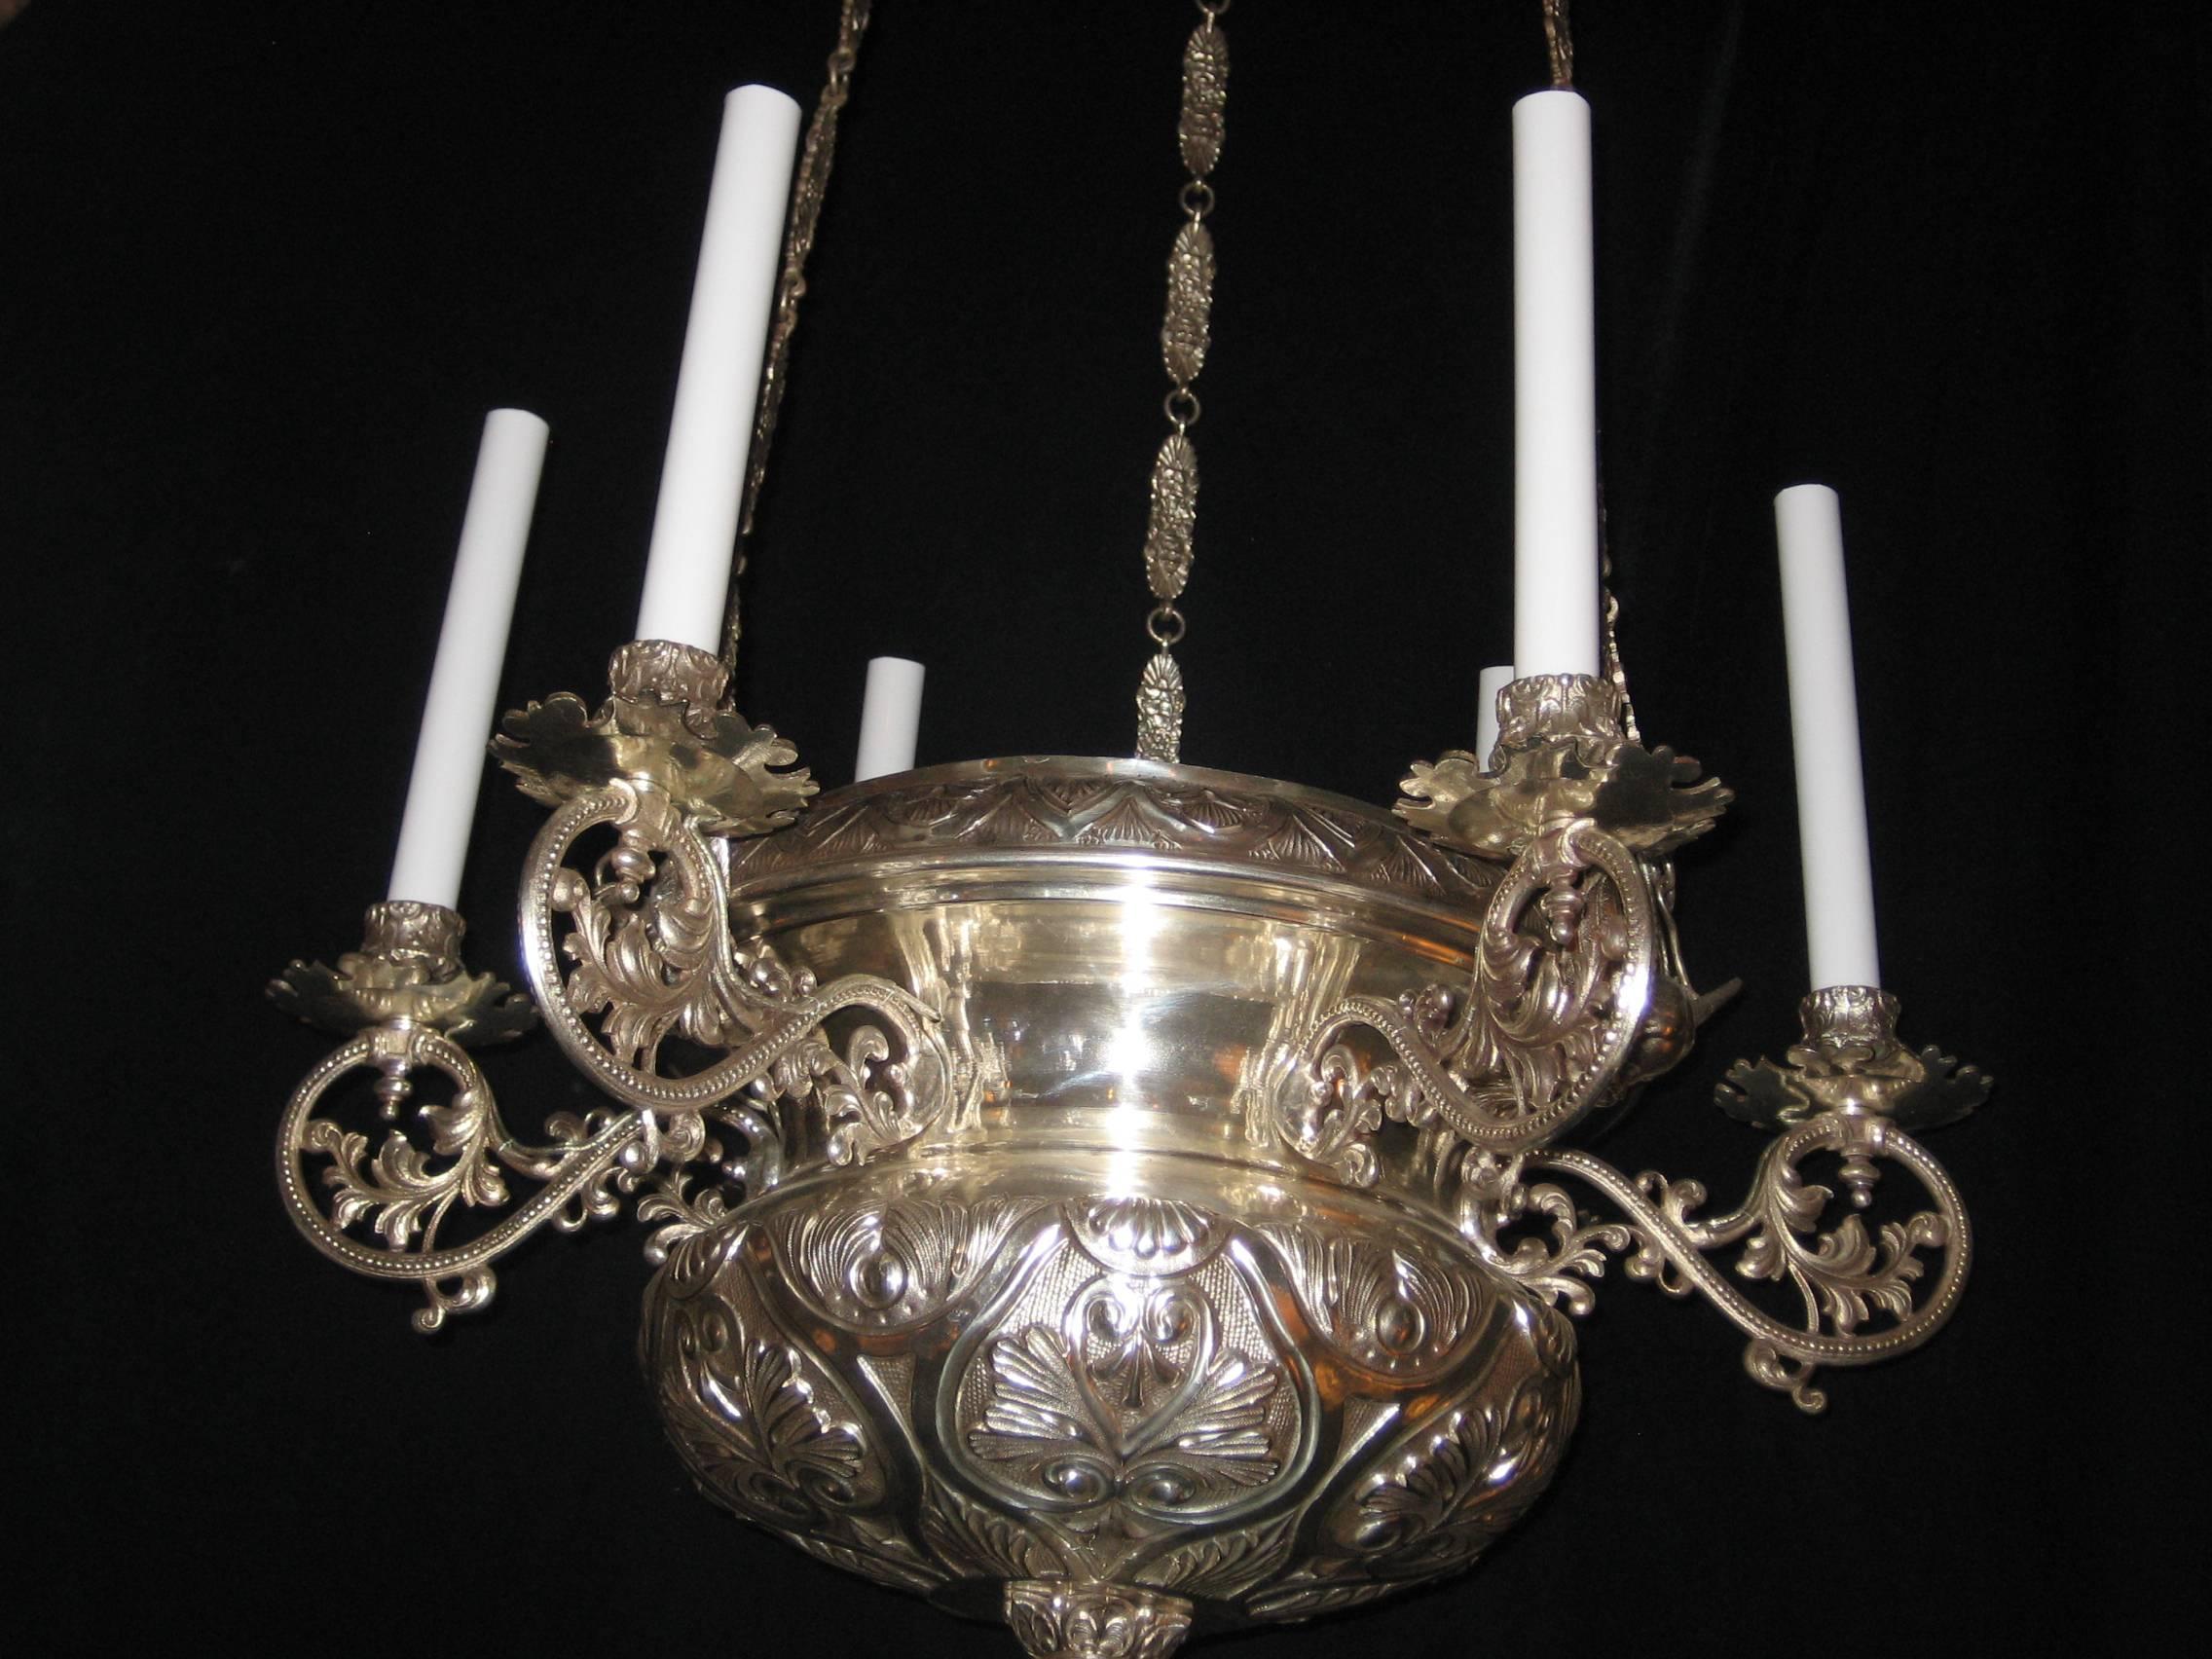 A unique antique French Moorish style silvered bronze multi-light chandelier.